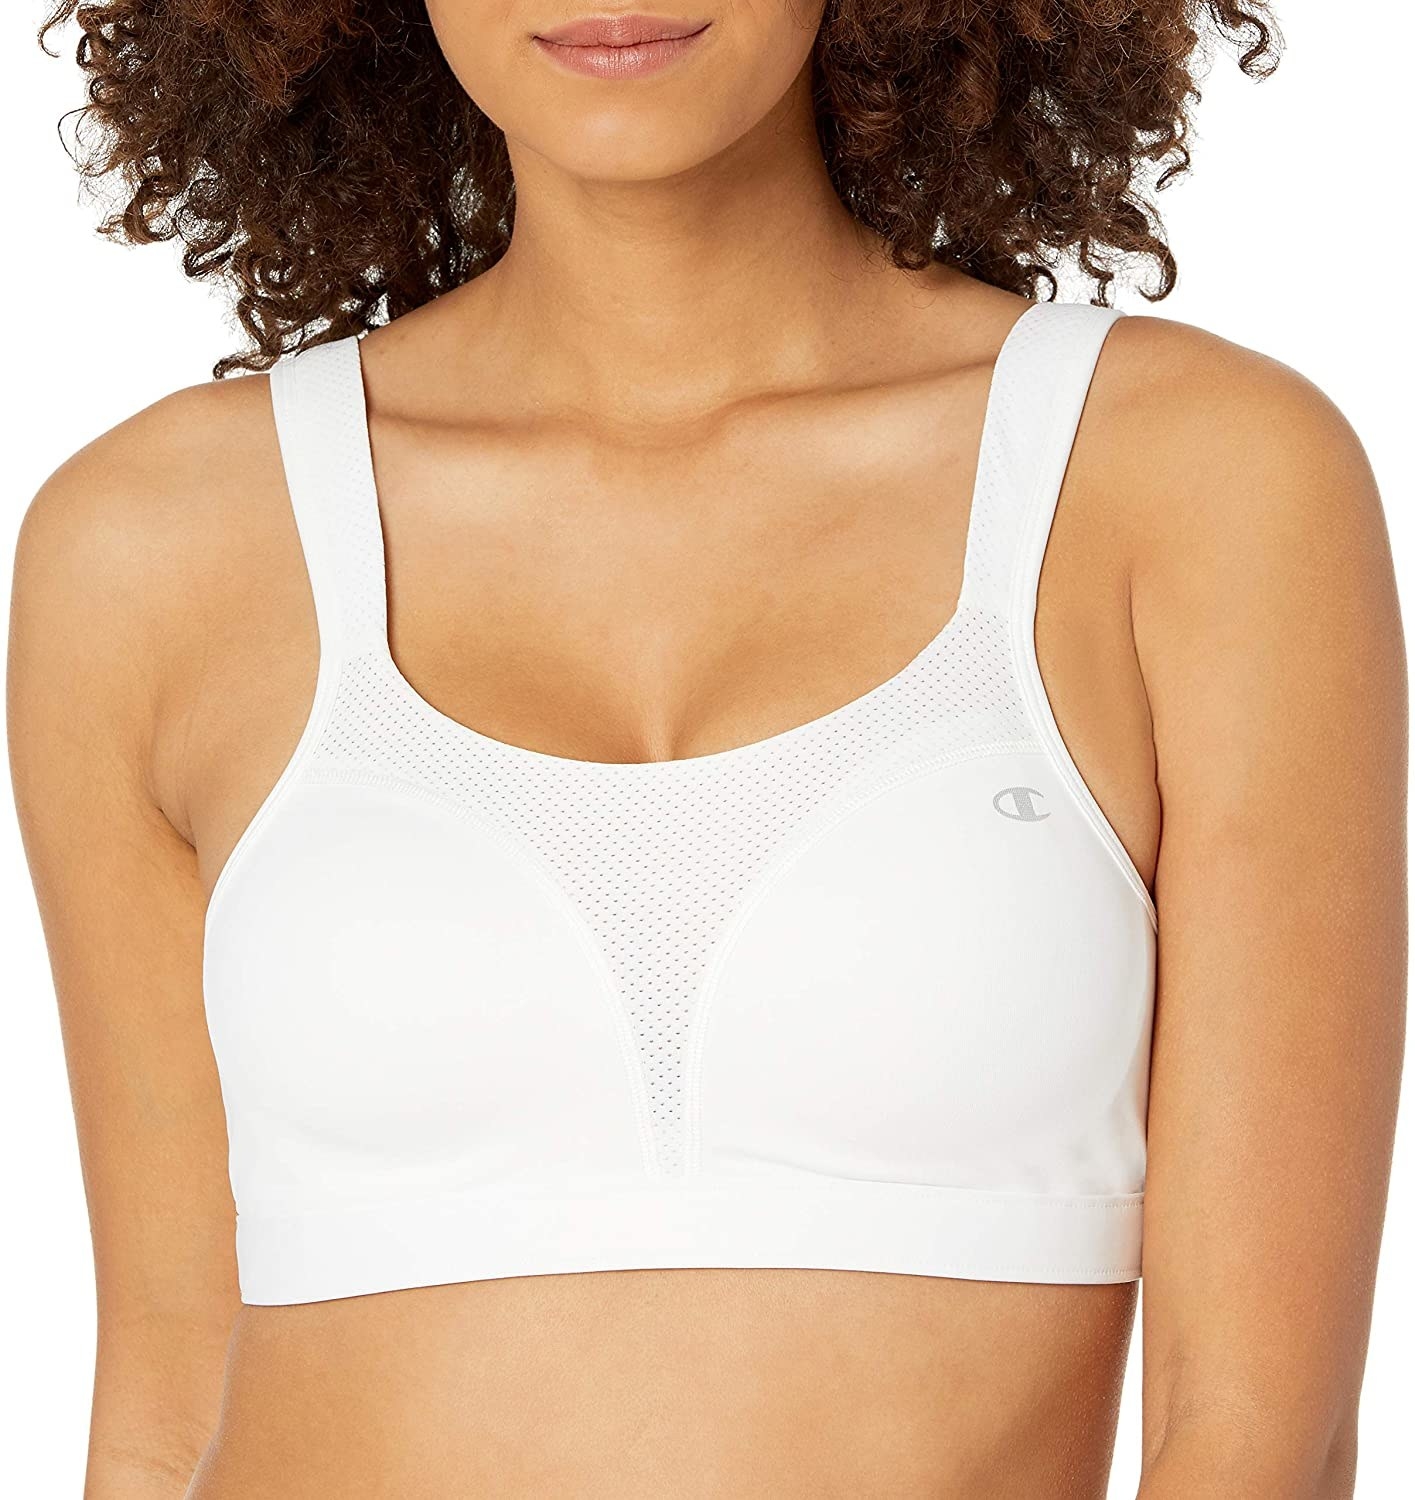 a model wearing the white champion sports bra